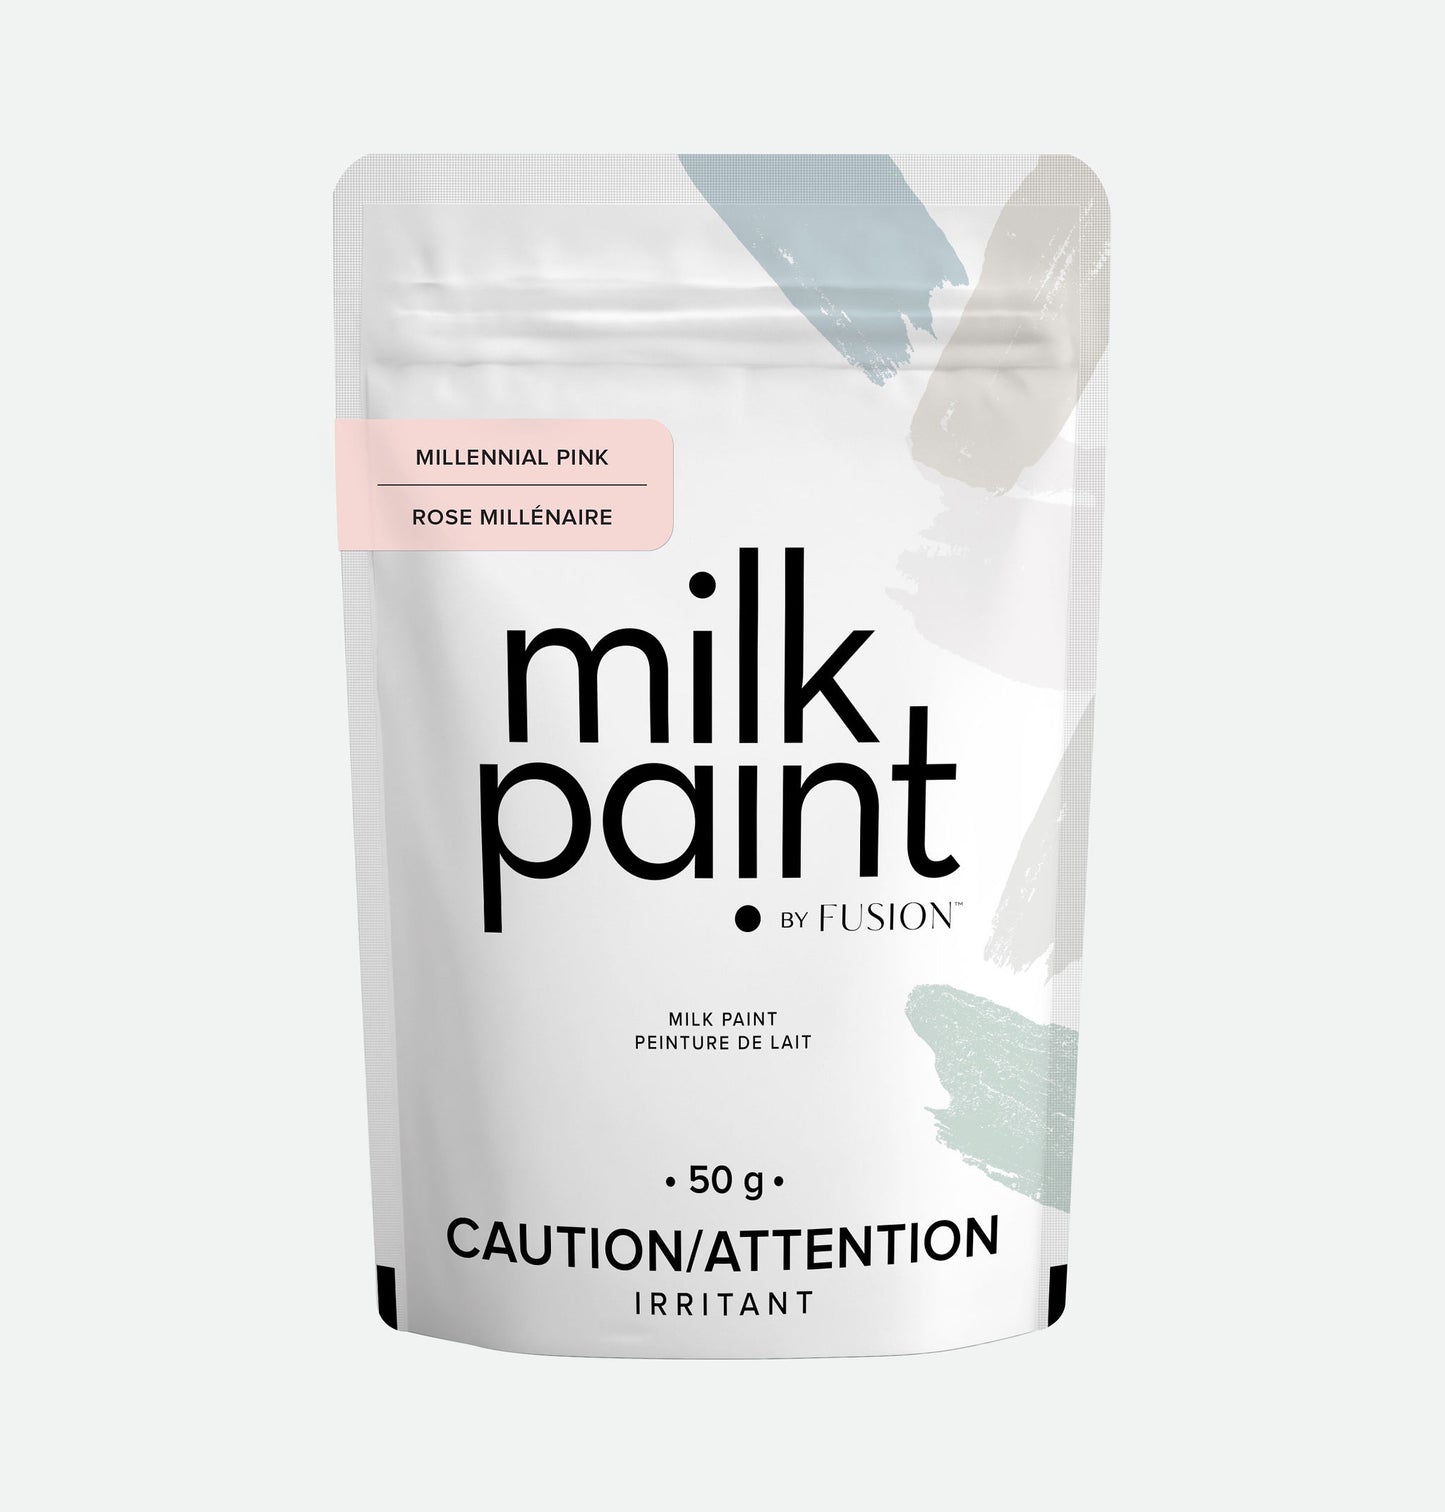 Milk Paint by Fusion - MILLENNIAL PINK | milk-paint-by-fusion-millennial-pink | Refinished P/L